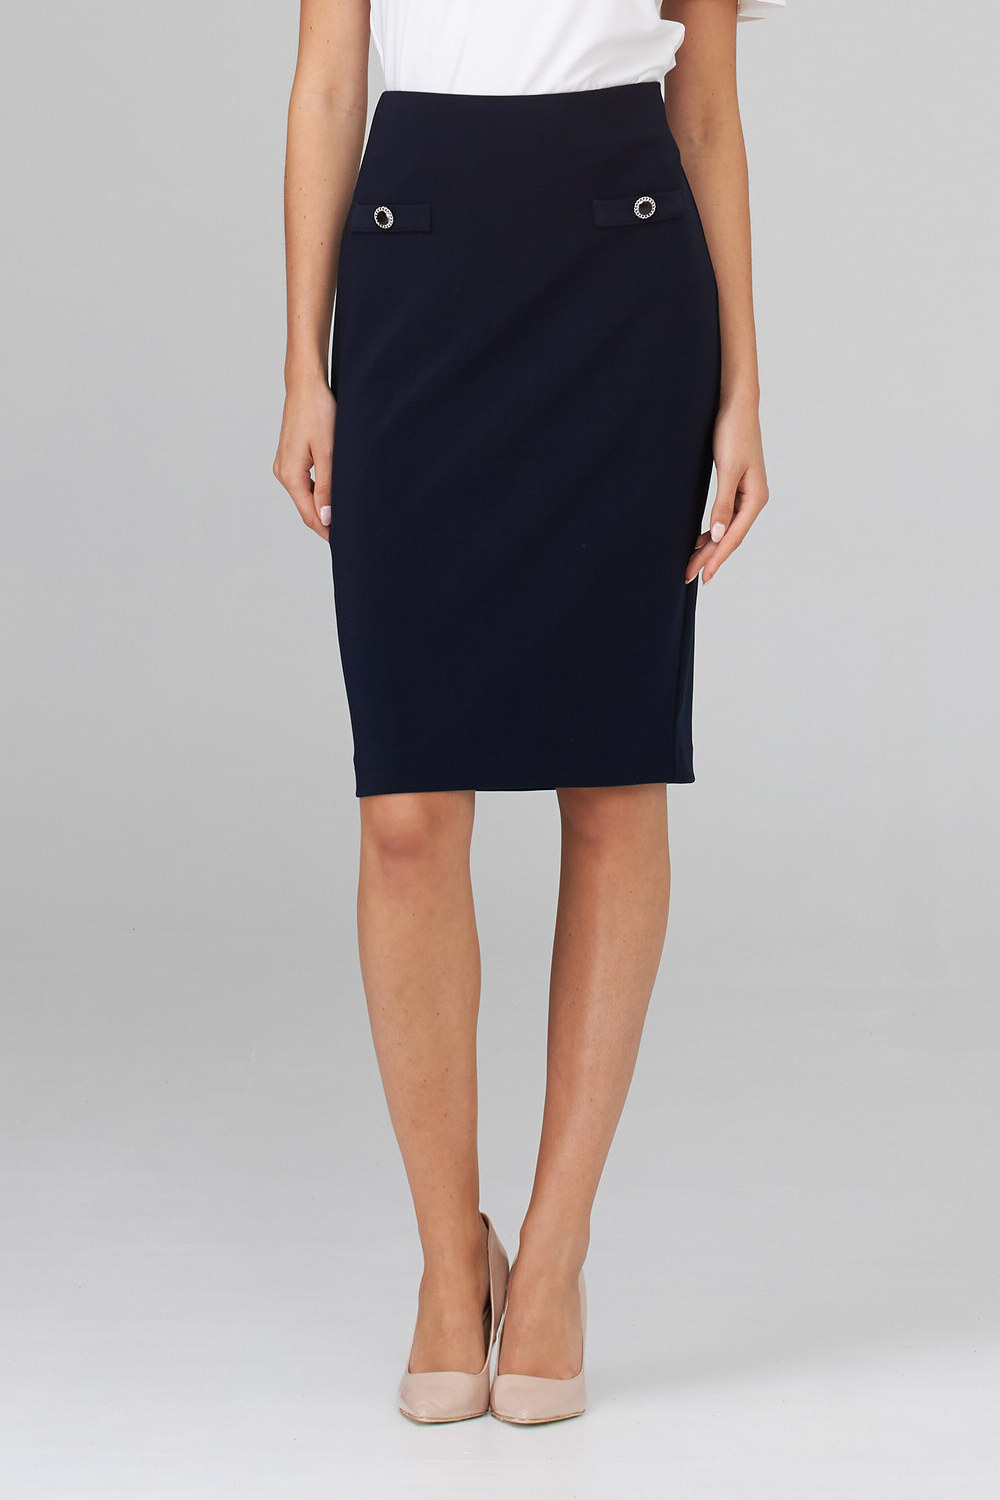 Joseph Ribkoff Skirt Style 202353. Midnight Blue